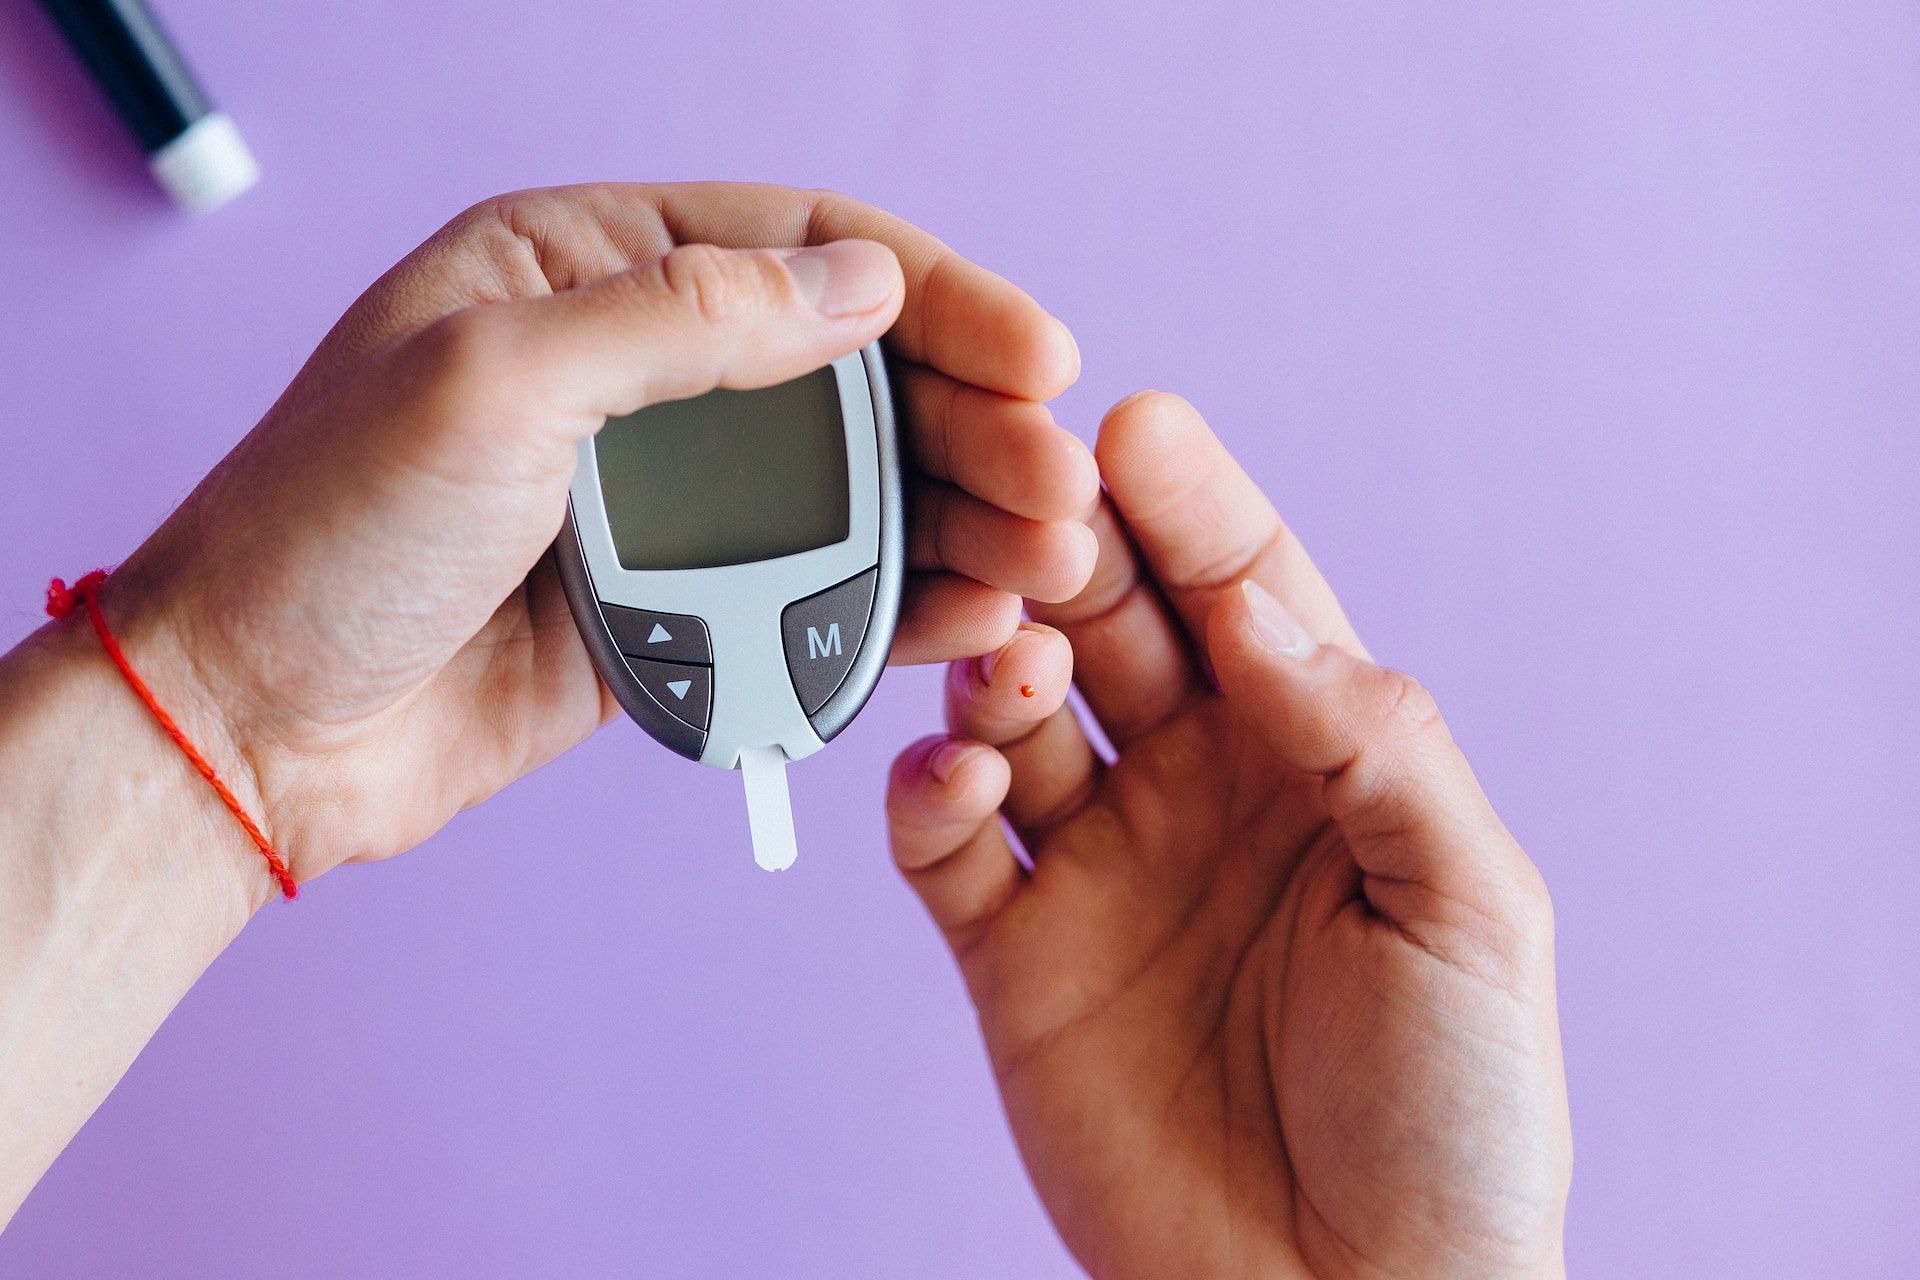 The health benefits of kefir include managing blood sugar level. (Photo via Pexels/Nataliya Vaitkevich)